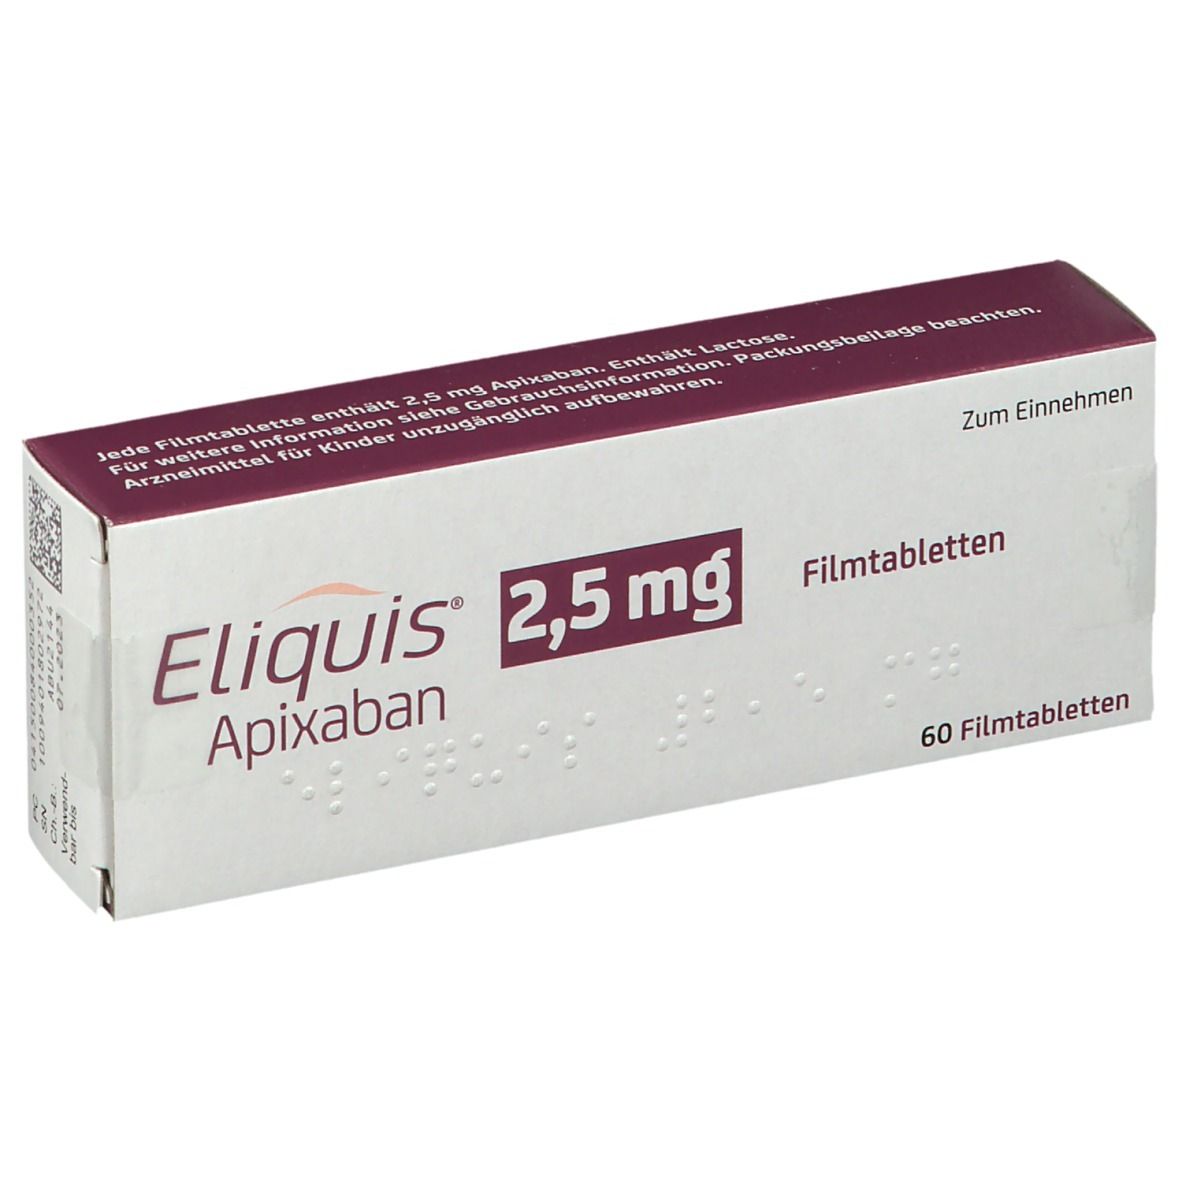 Eliquis® 2,5 mg